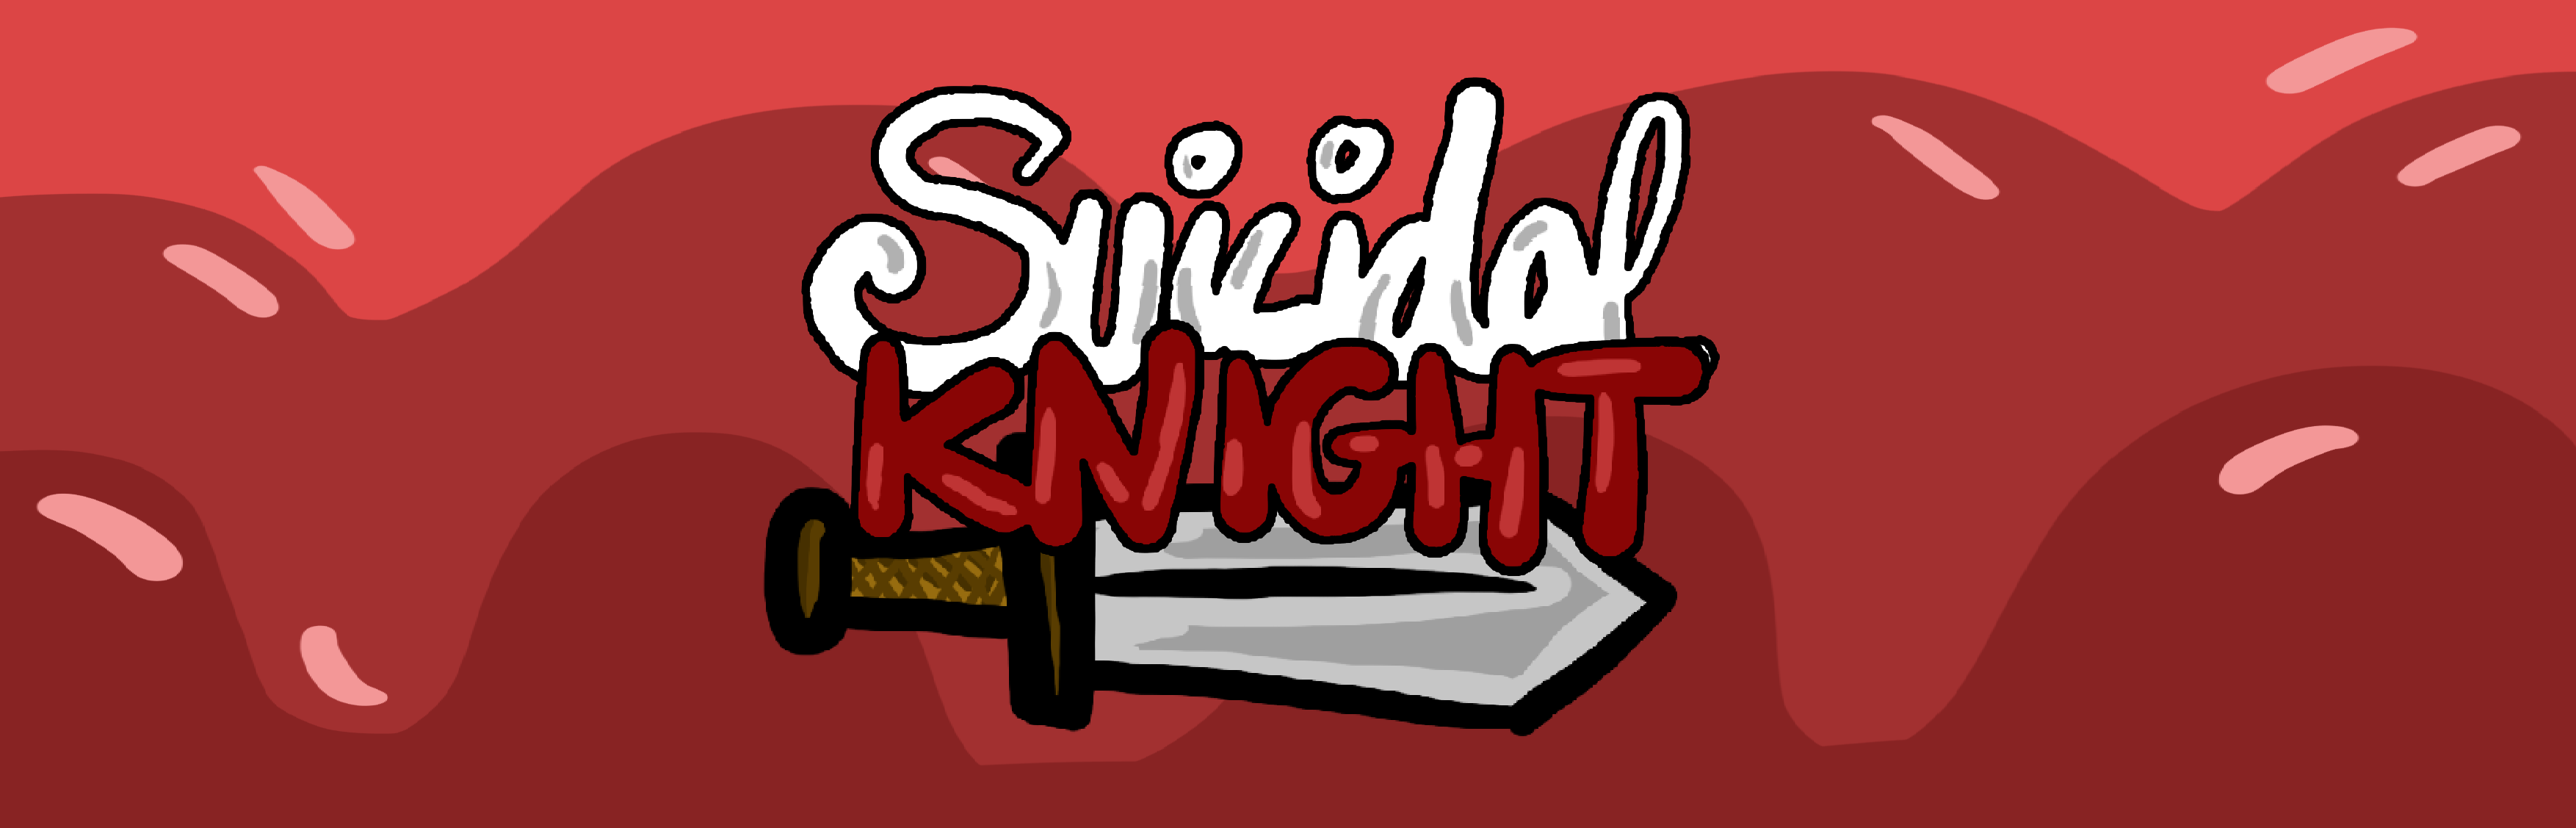 Suicidal Knight